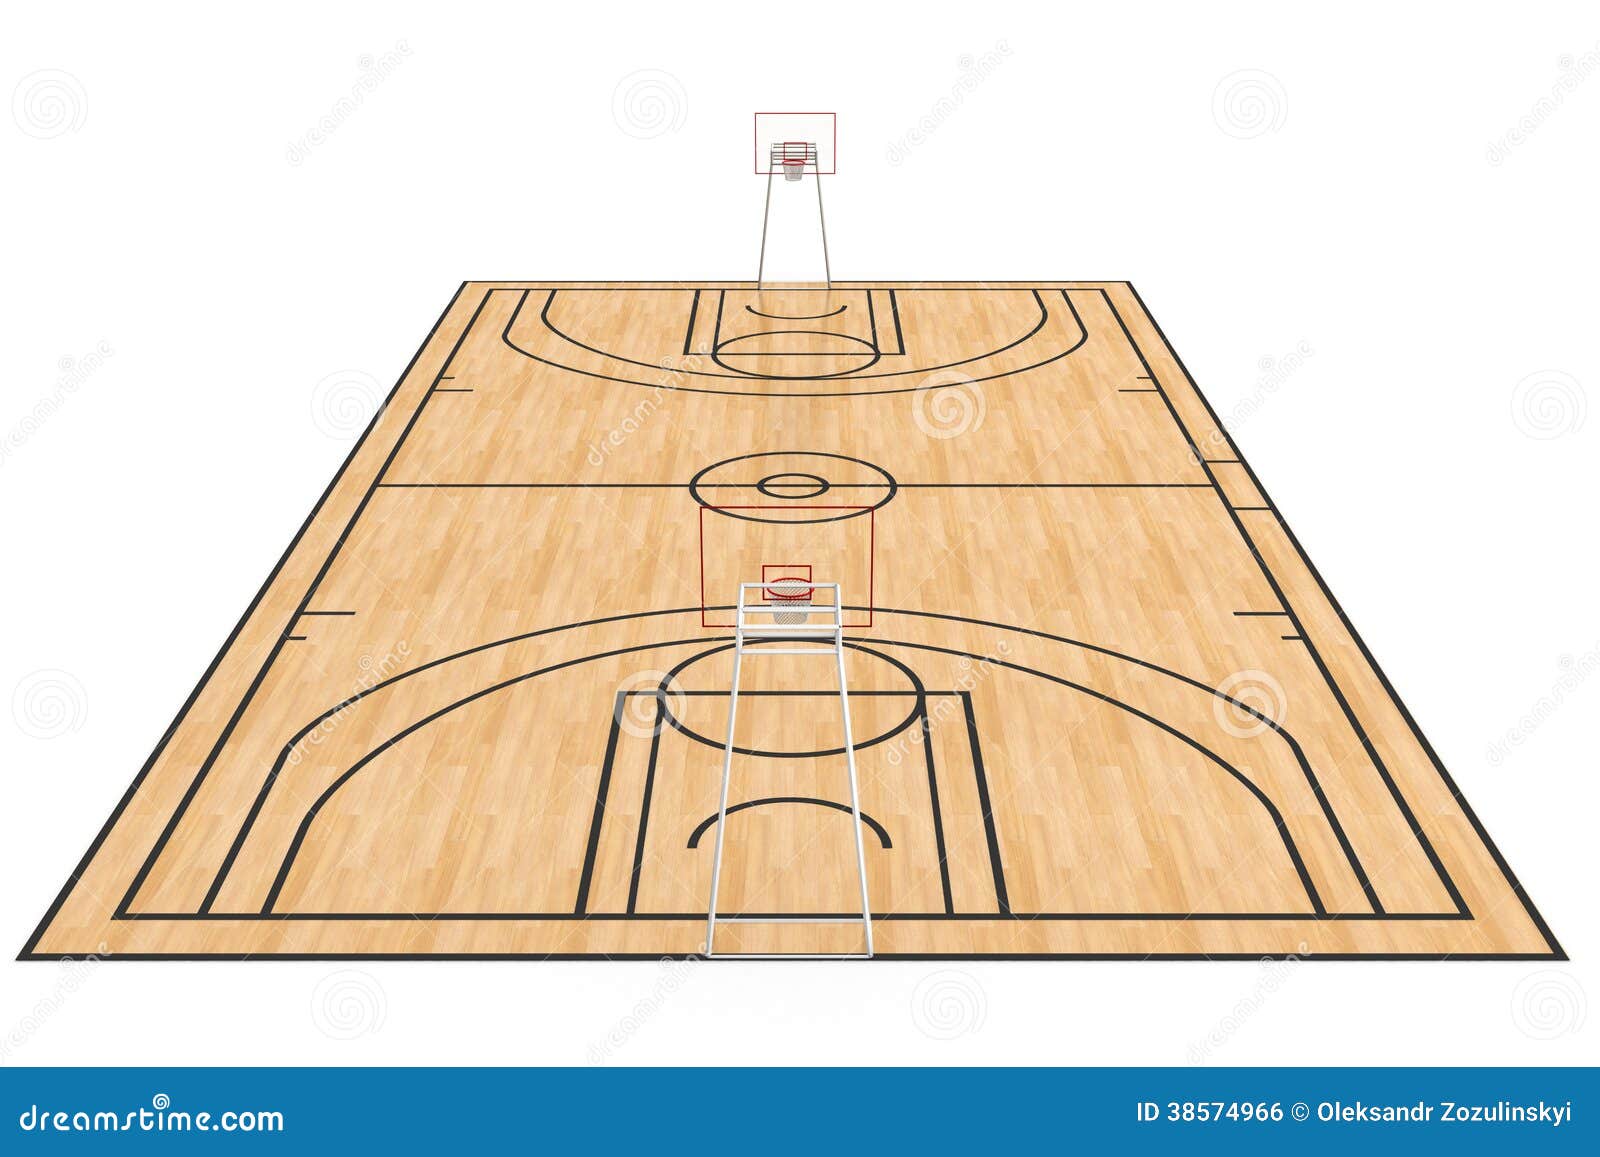 Basketball court #4 stock illustration. Illustration of gymnasium